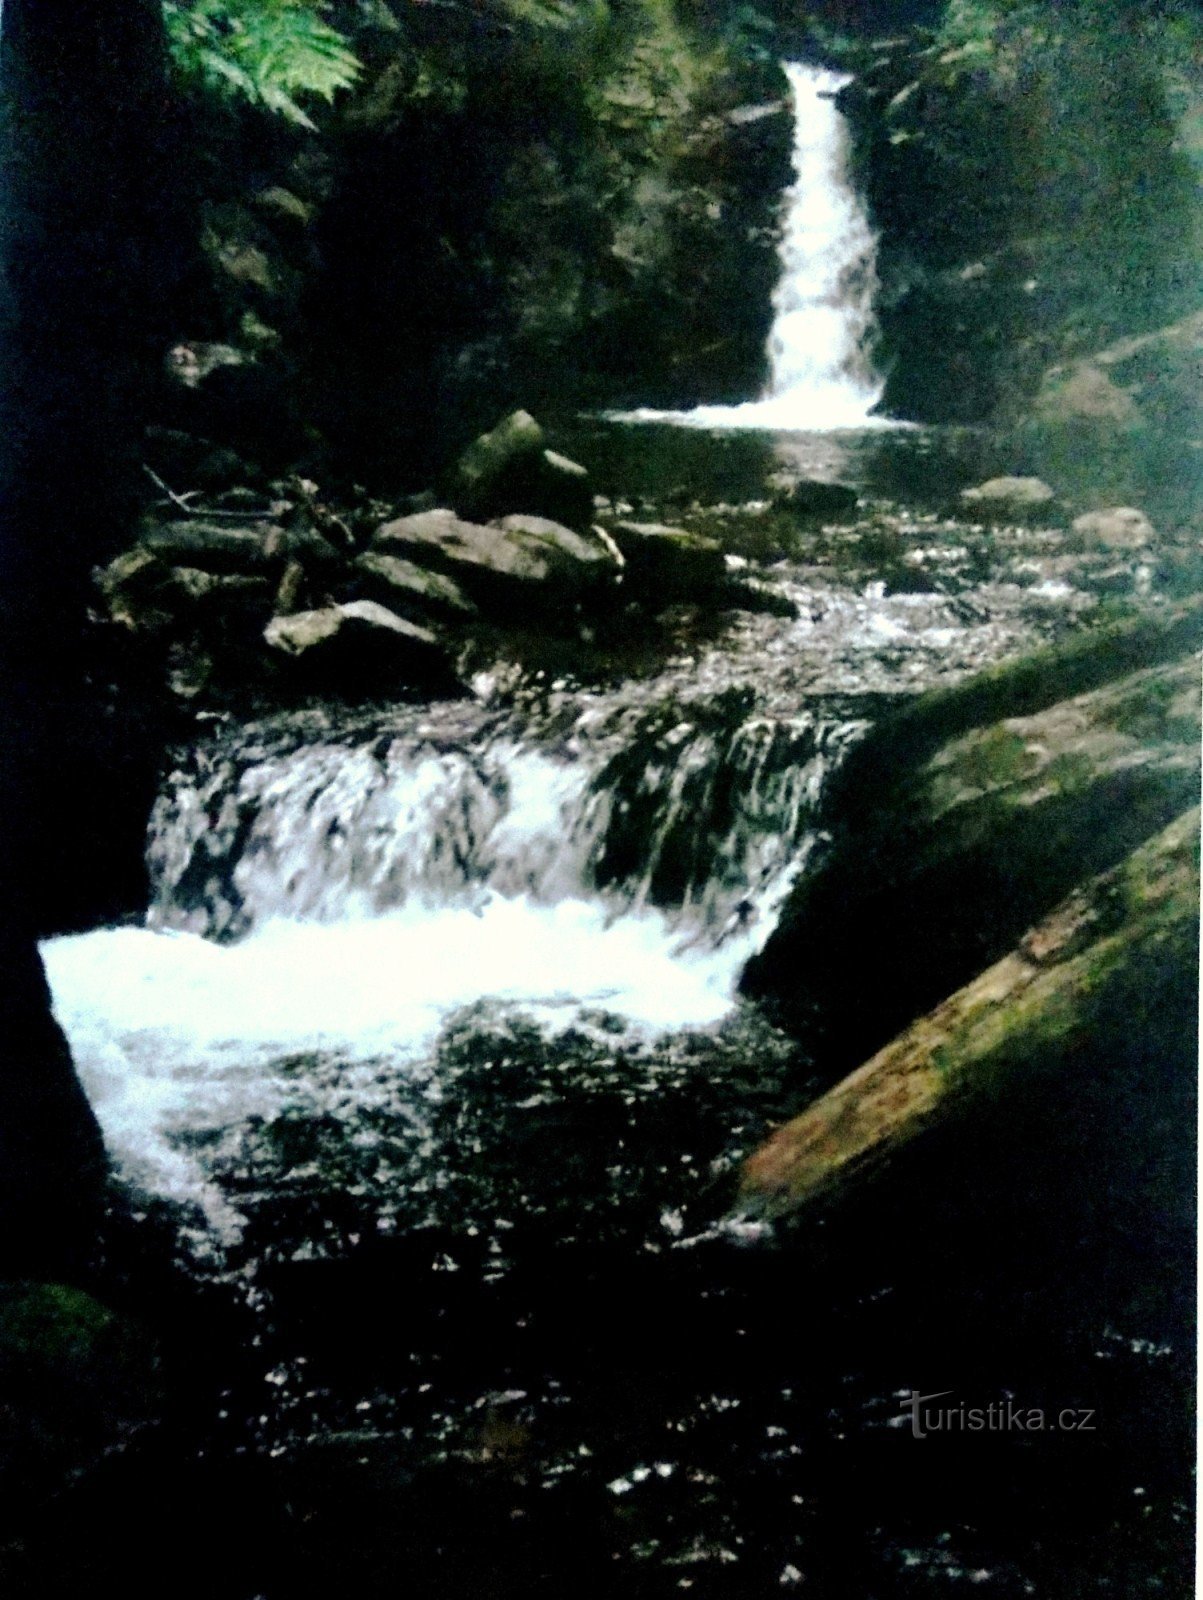 A las románticas cascadas de Nýzner en las montañas Rychleb